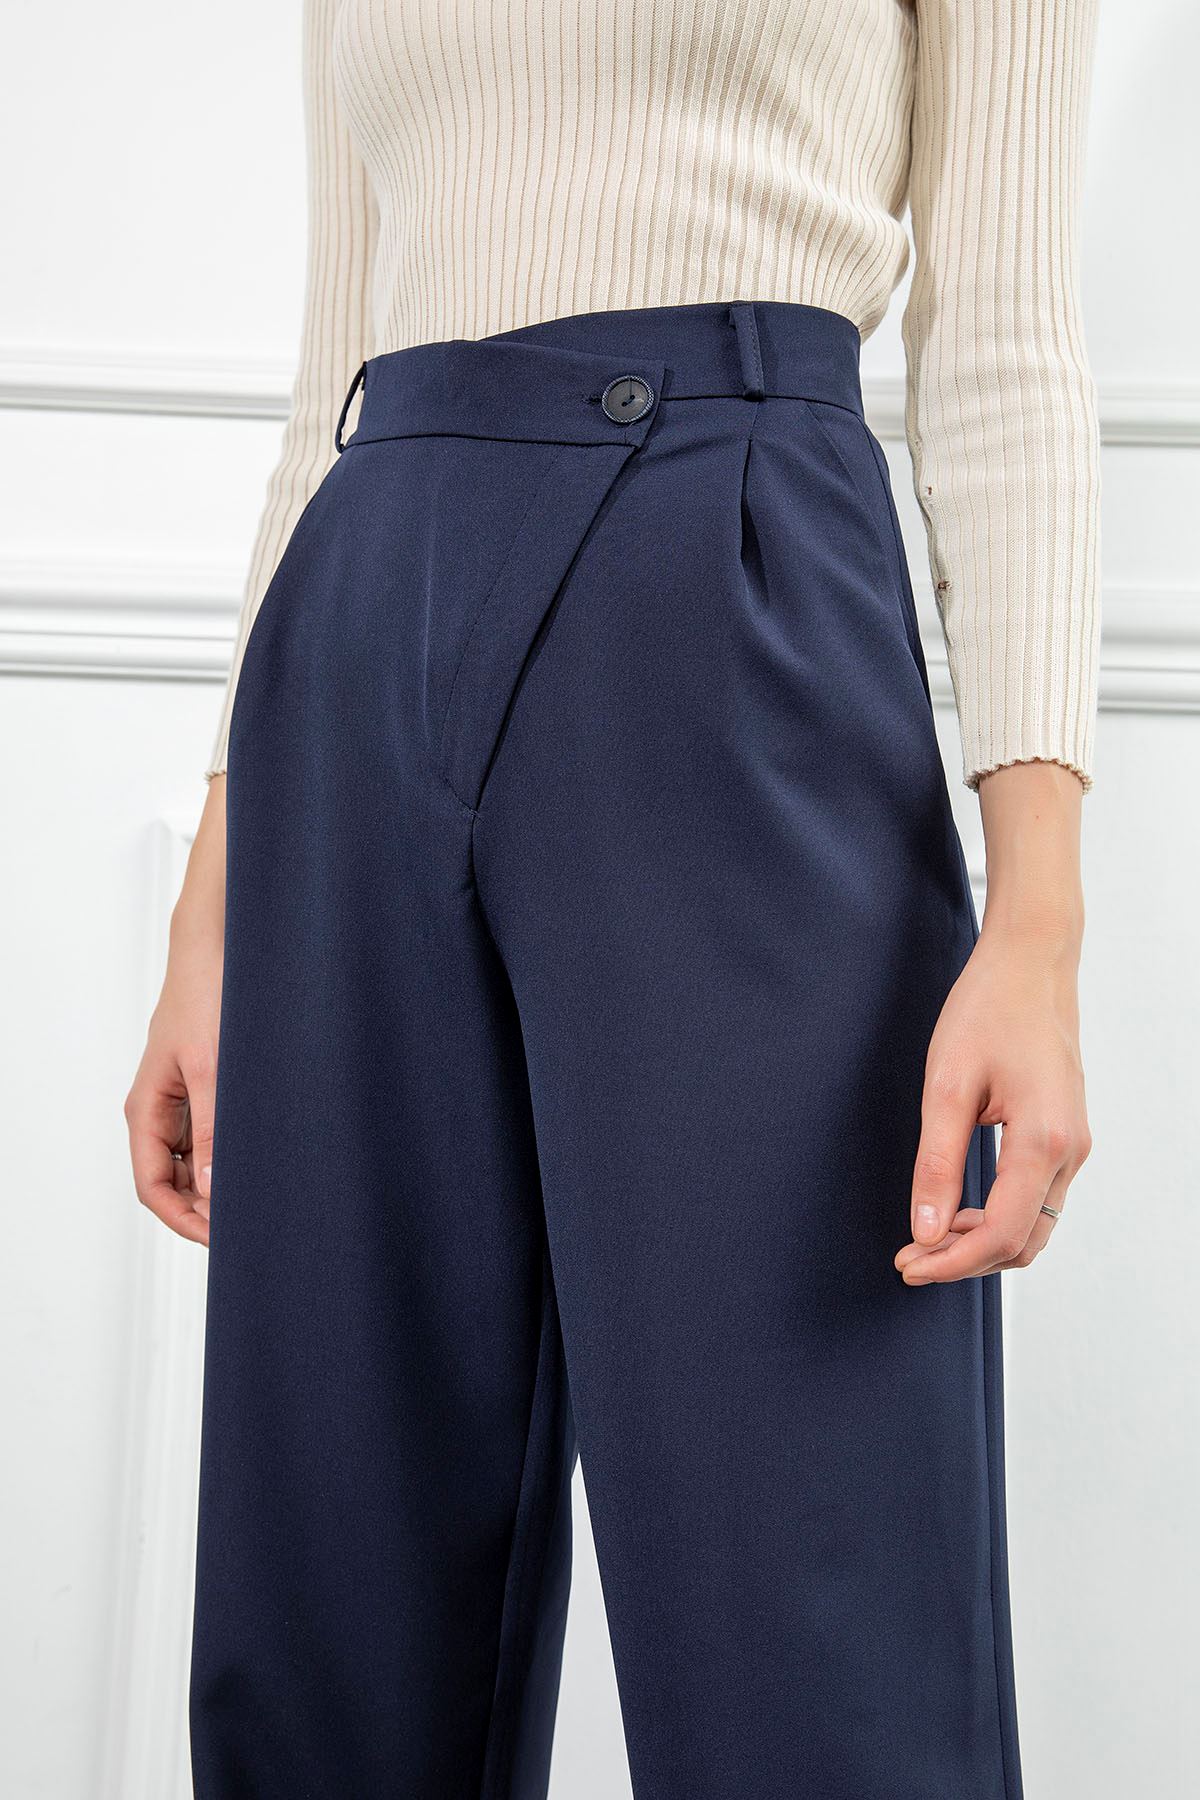 Atlas Fabric Maxi Wide Asymmetric Women'S Trouser - Navy Blue 